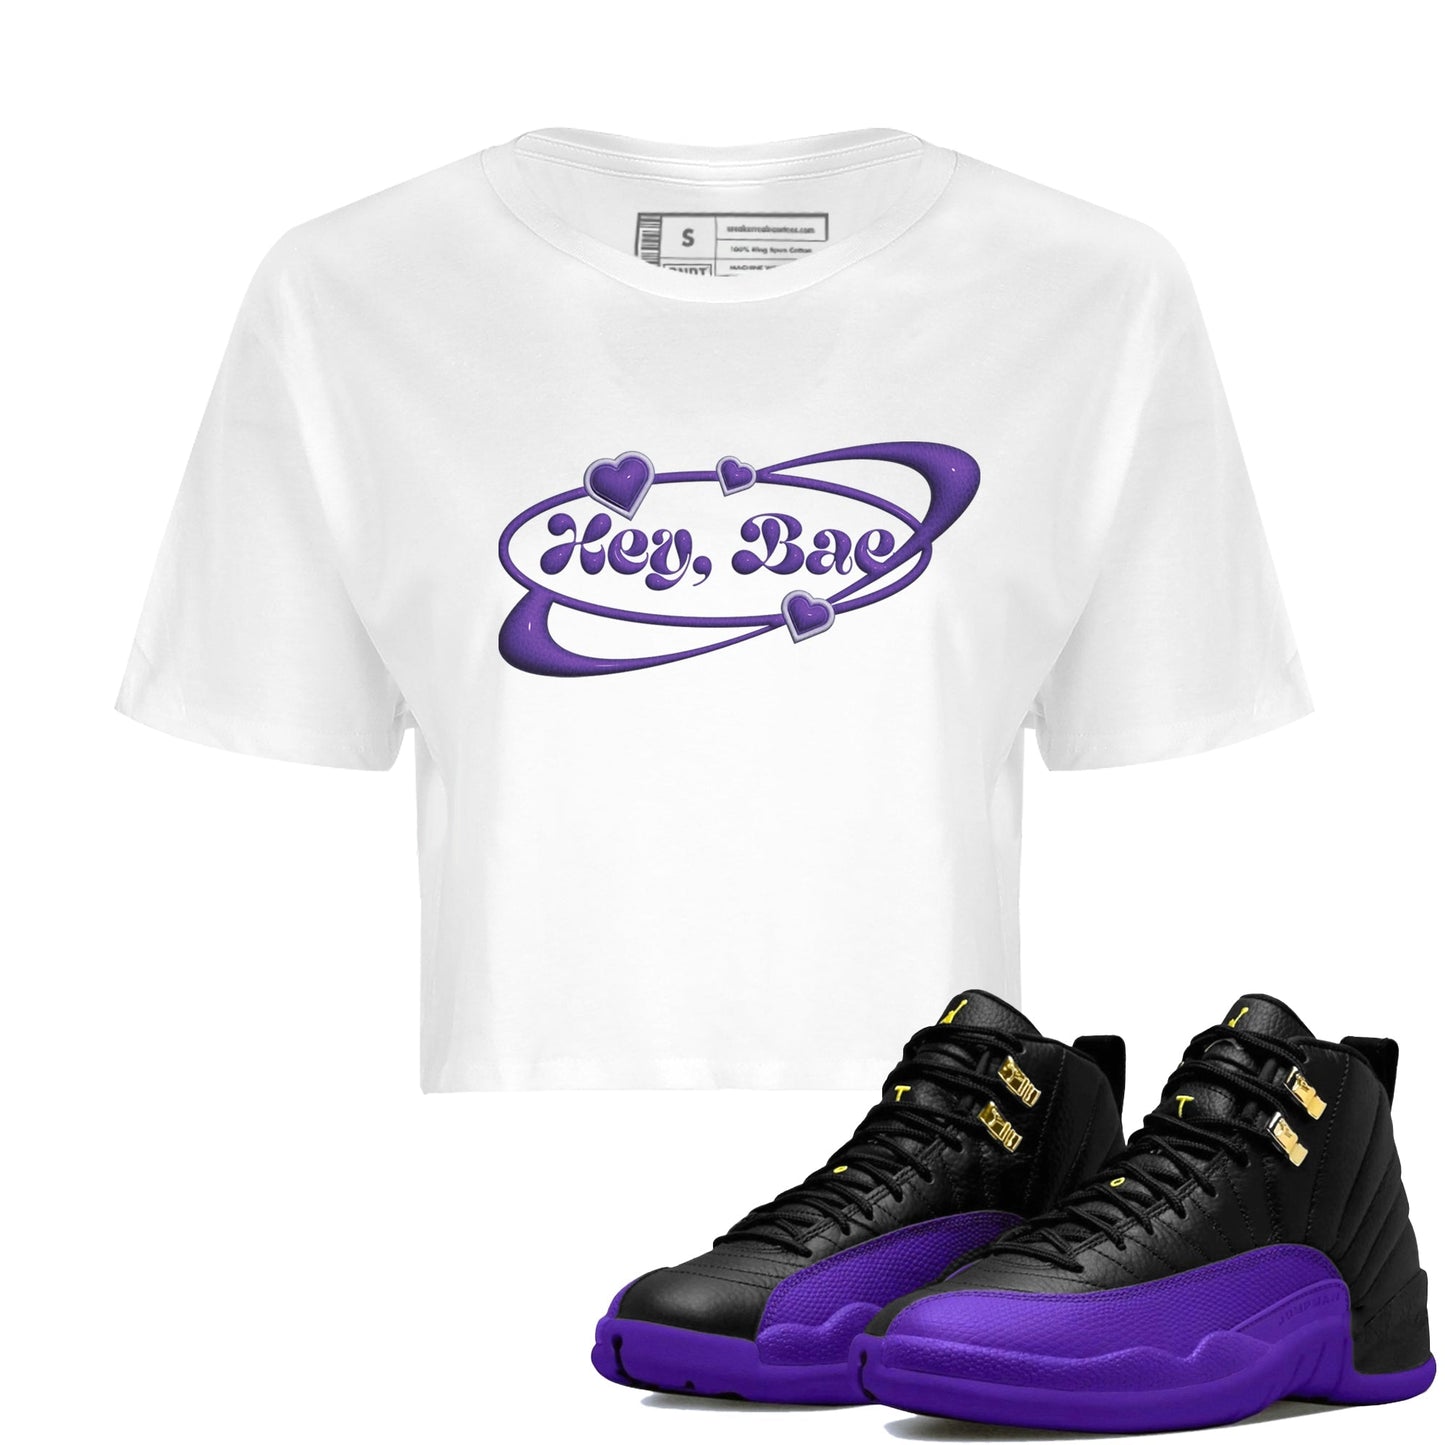 Air Jordan 12 Field Purple Sneaker Match Tees Hey Bae Sneaker Tees AJ12 Field Purple Sneaker Release Tees Women's Shirts White 1